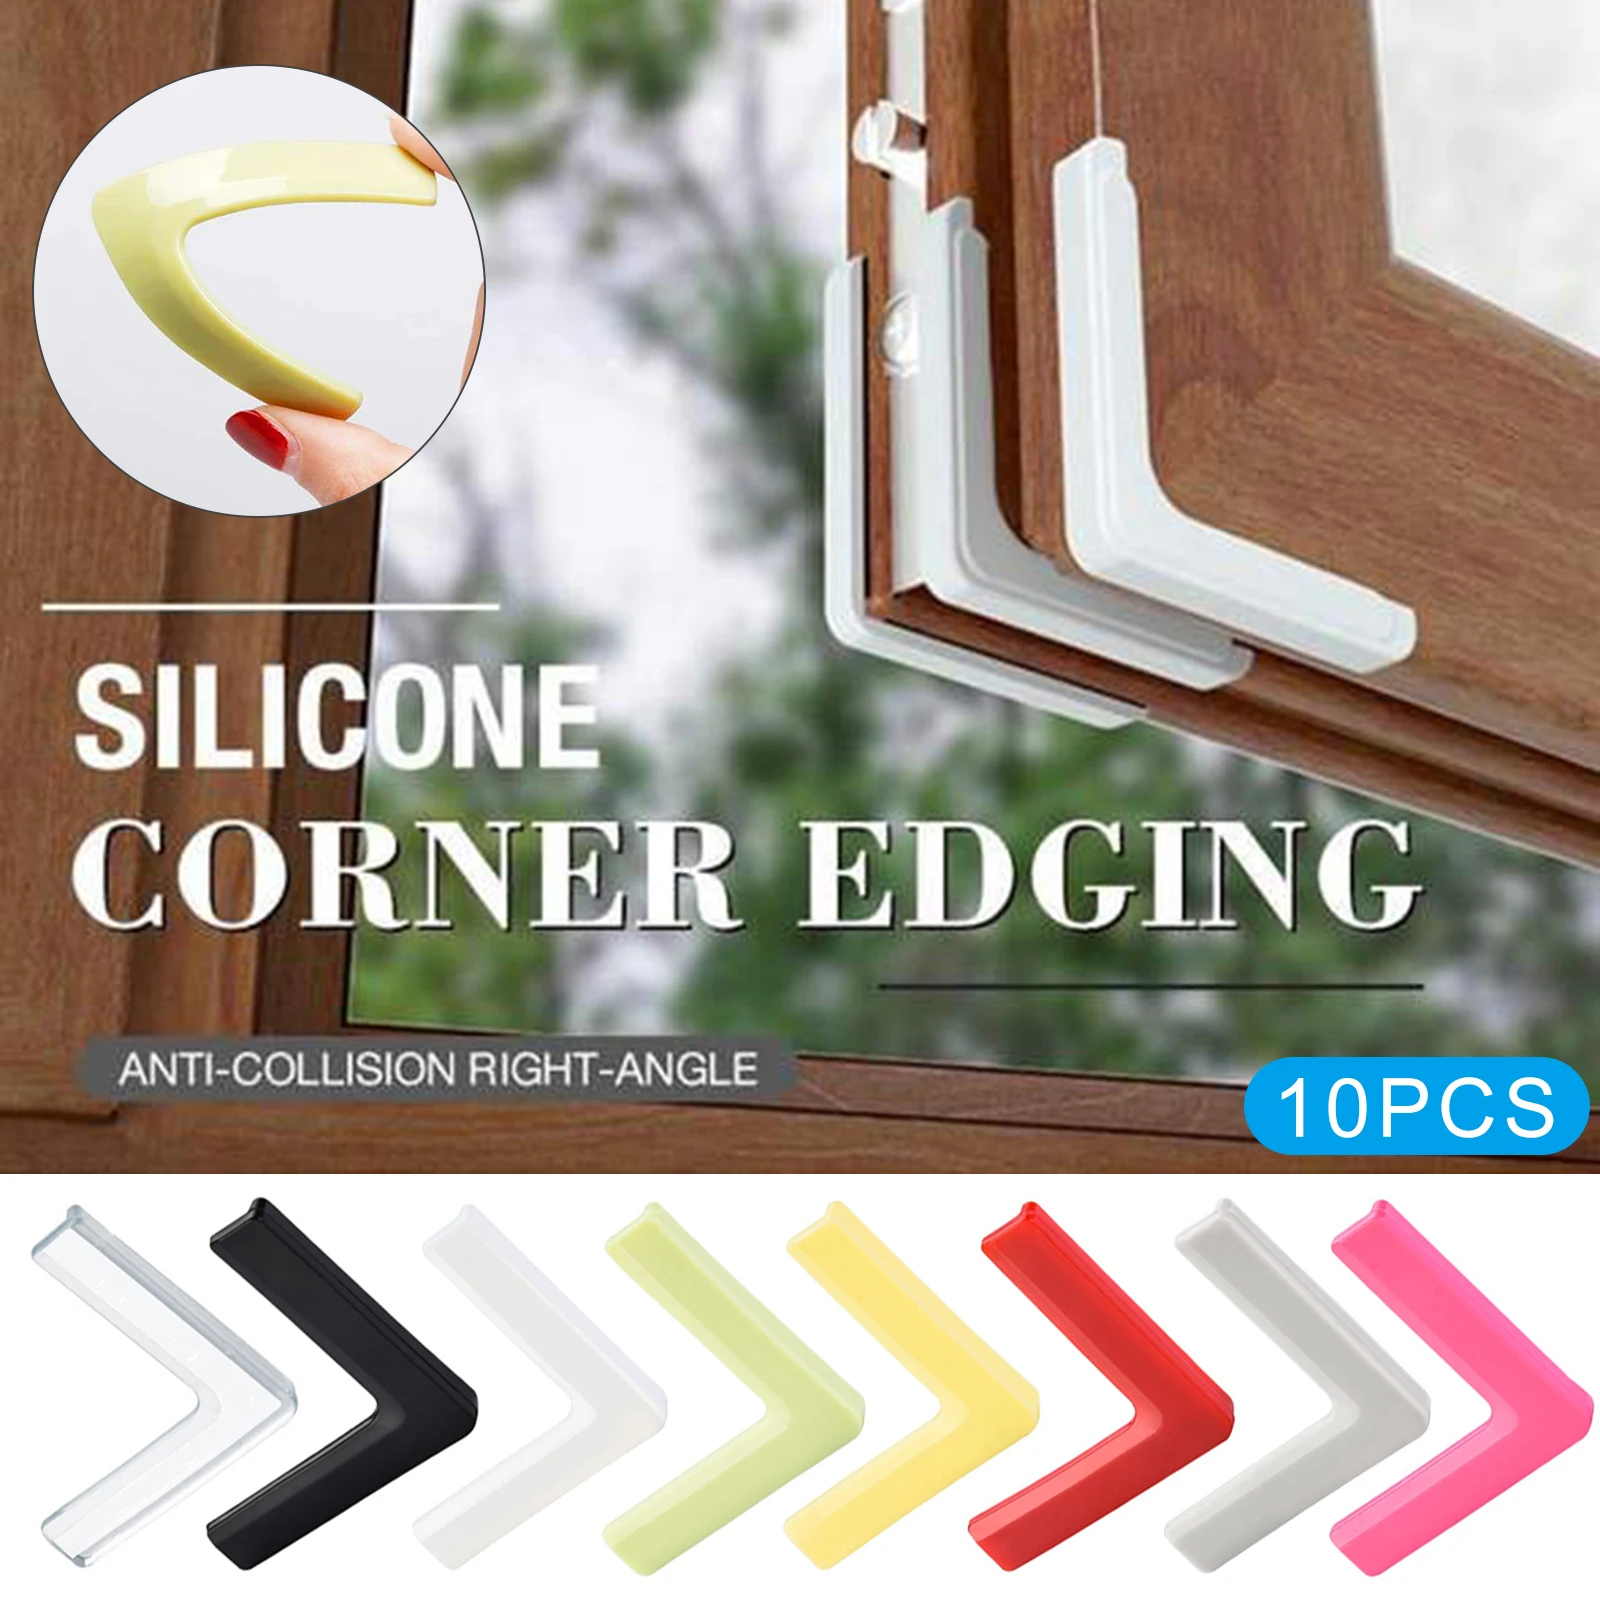 Right angle pvc corner edging furniture edge protectors window guard glass table corner thumb200